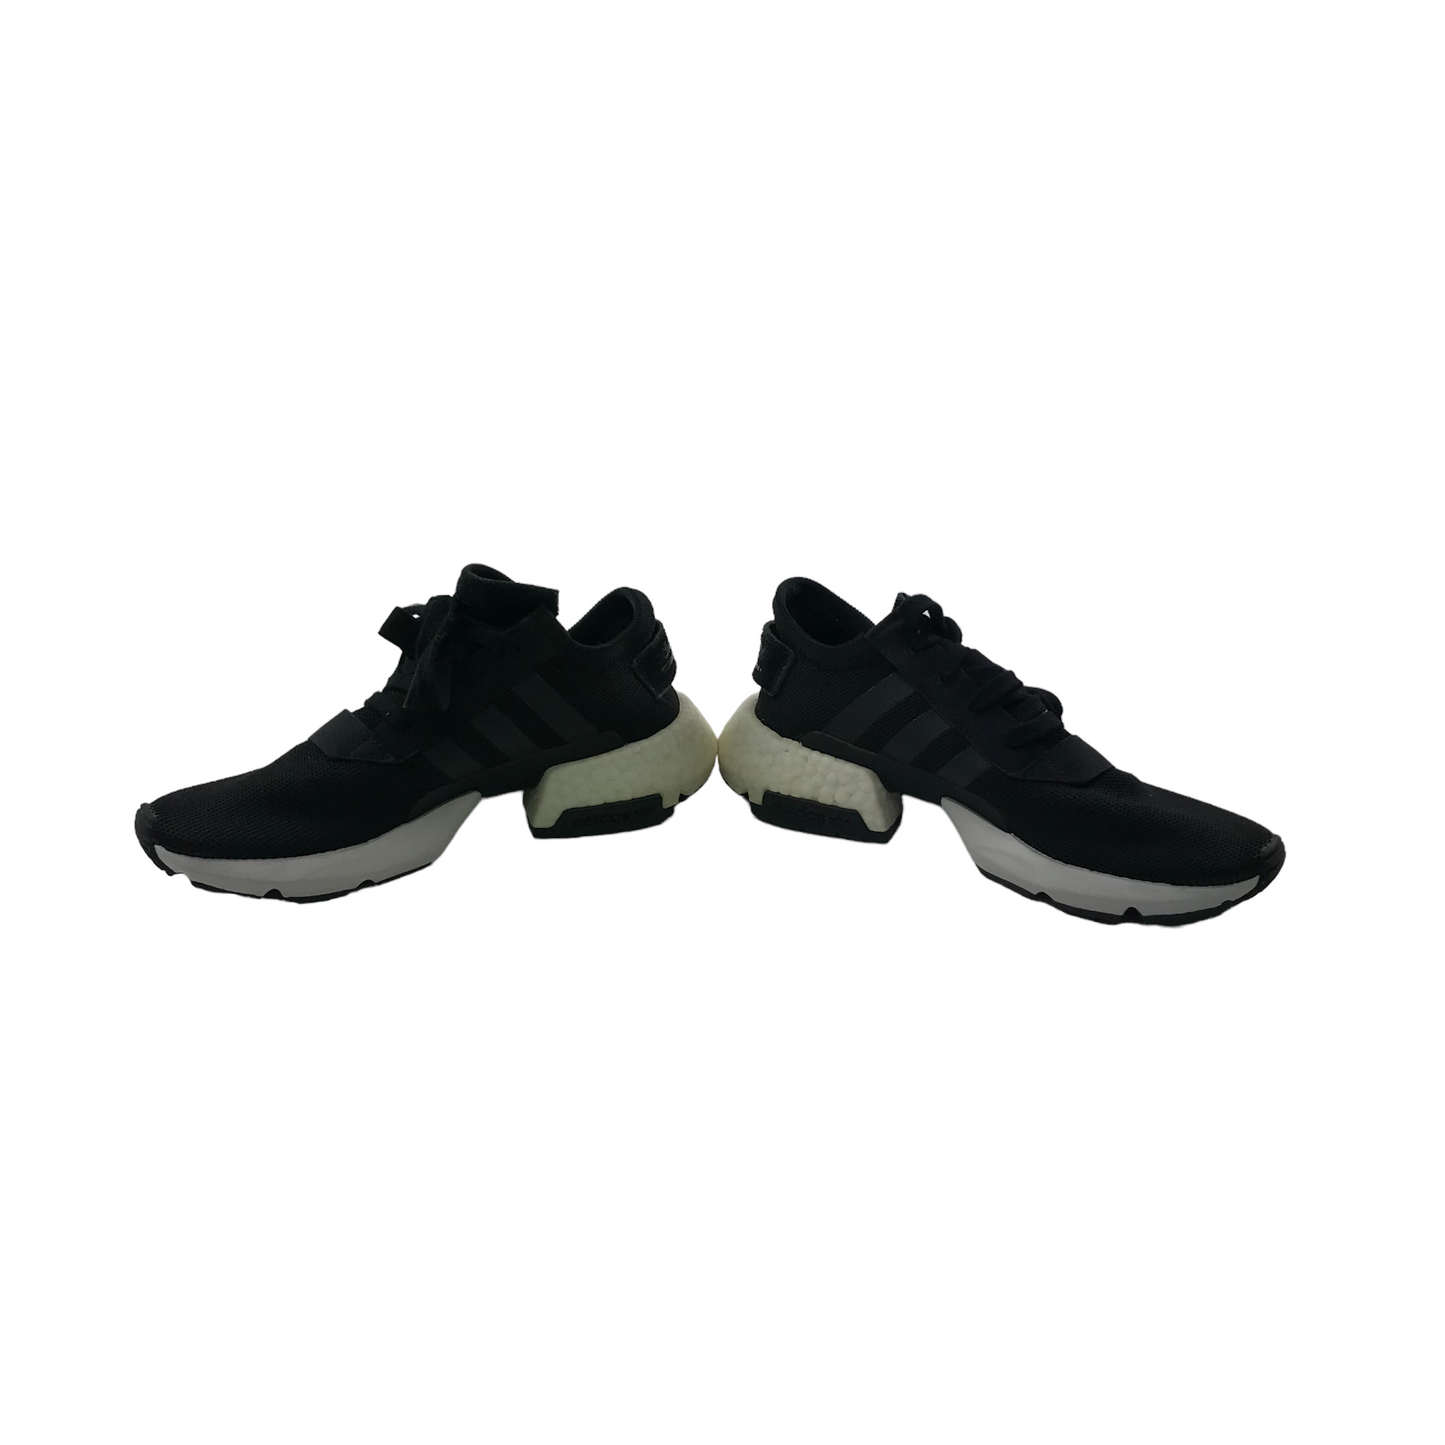 Adidas Pod-s3.1 Black Trainers Shoe Size 5